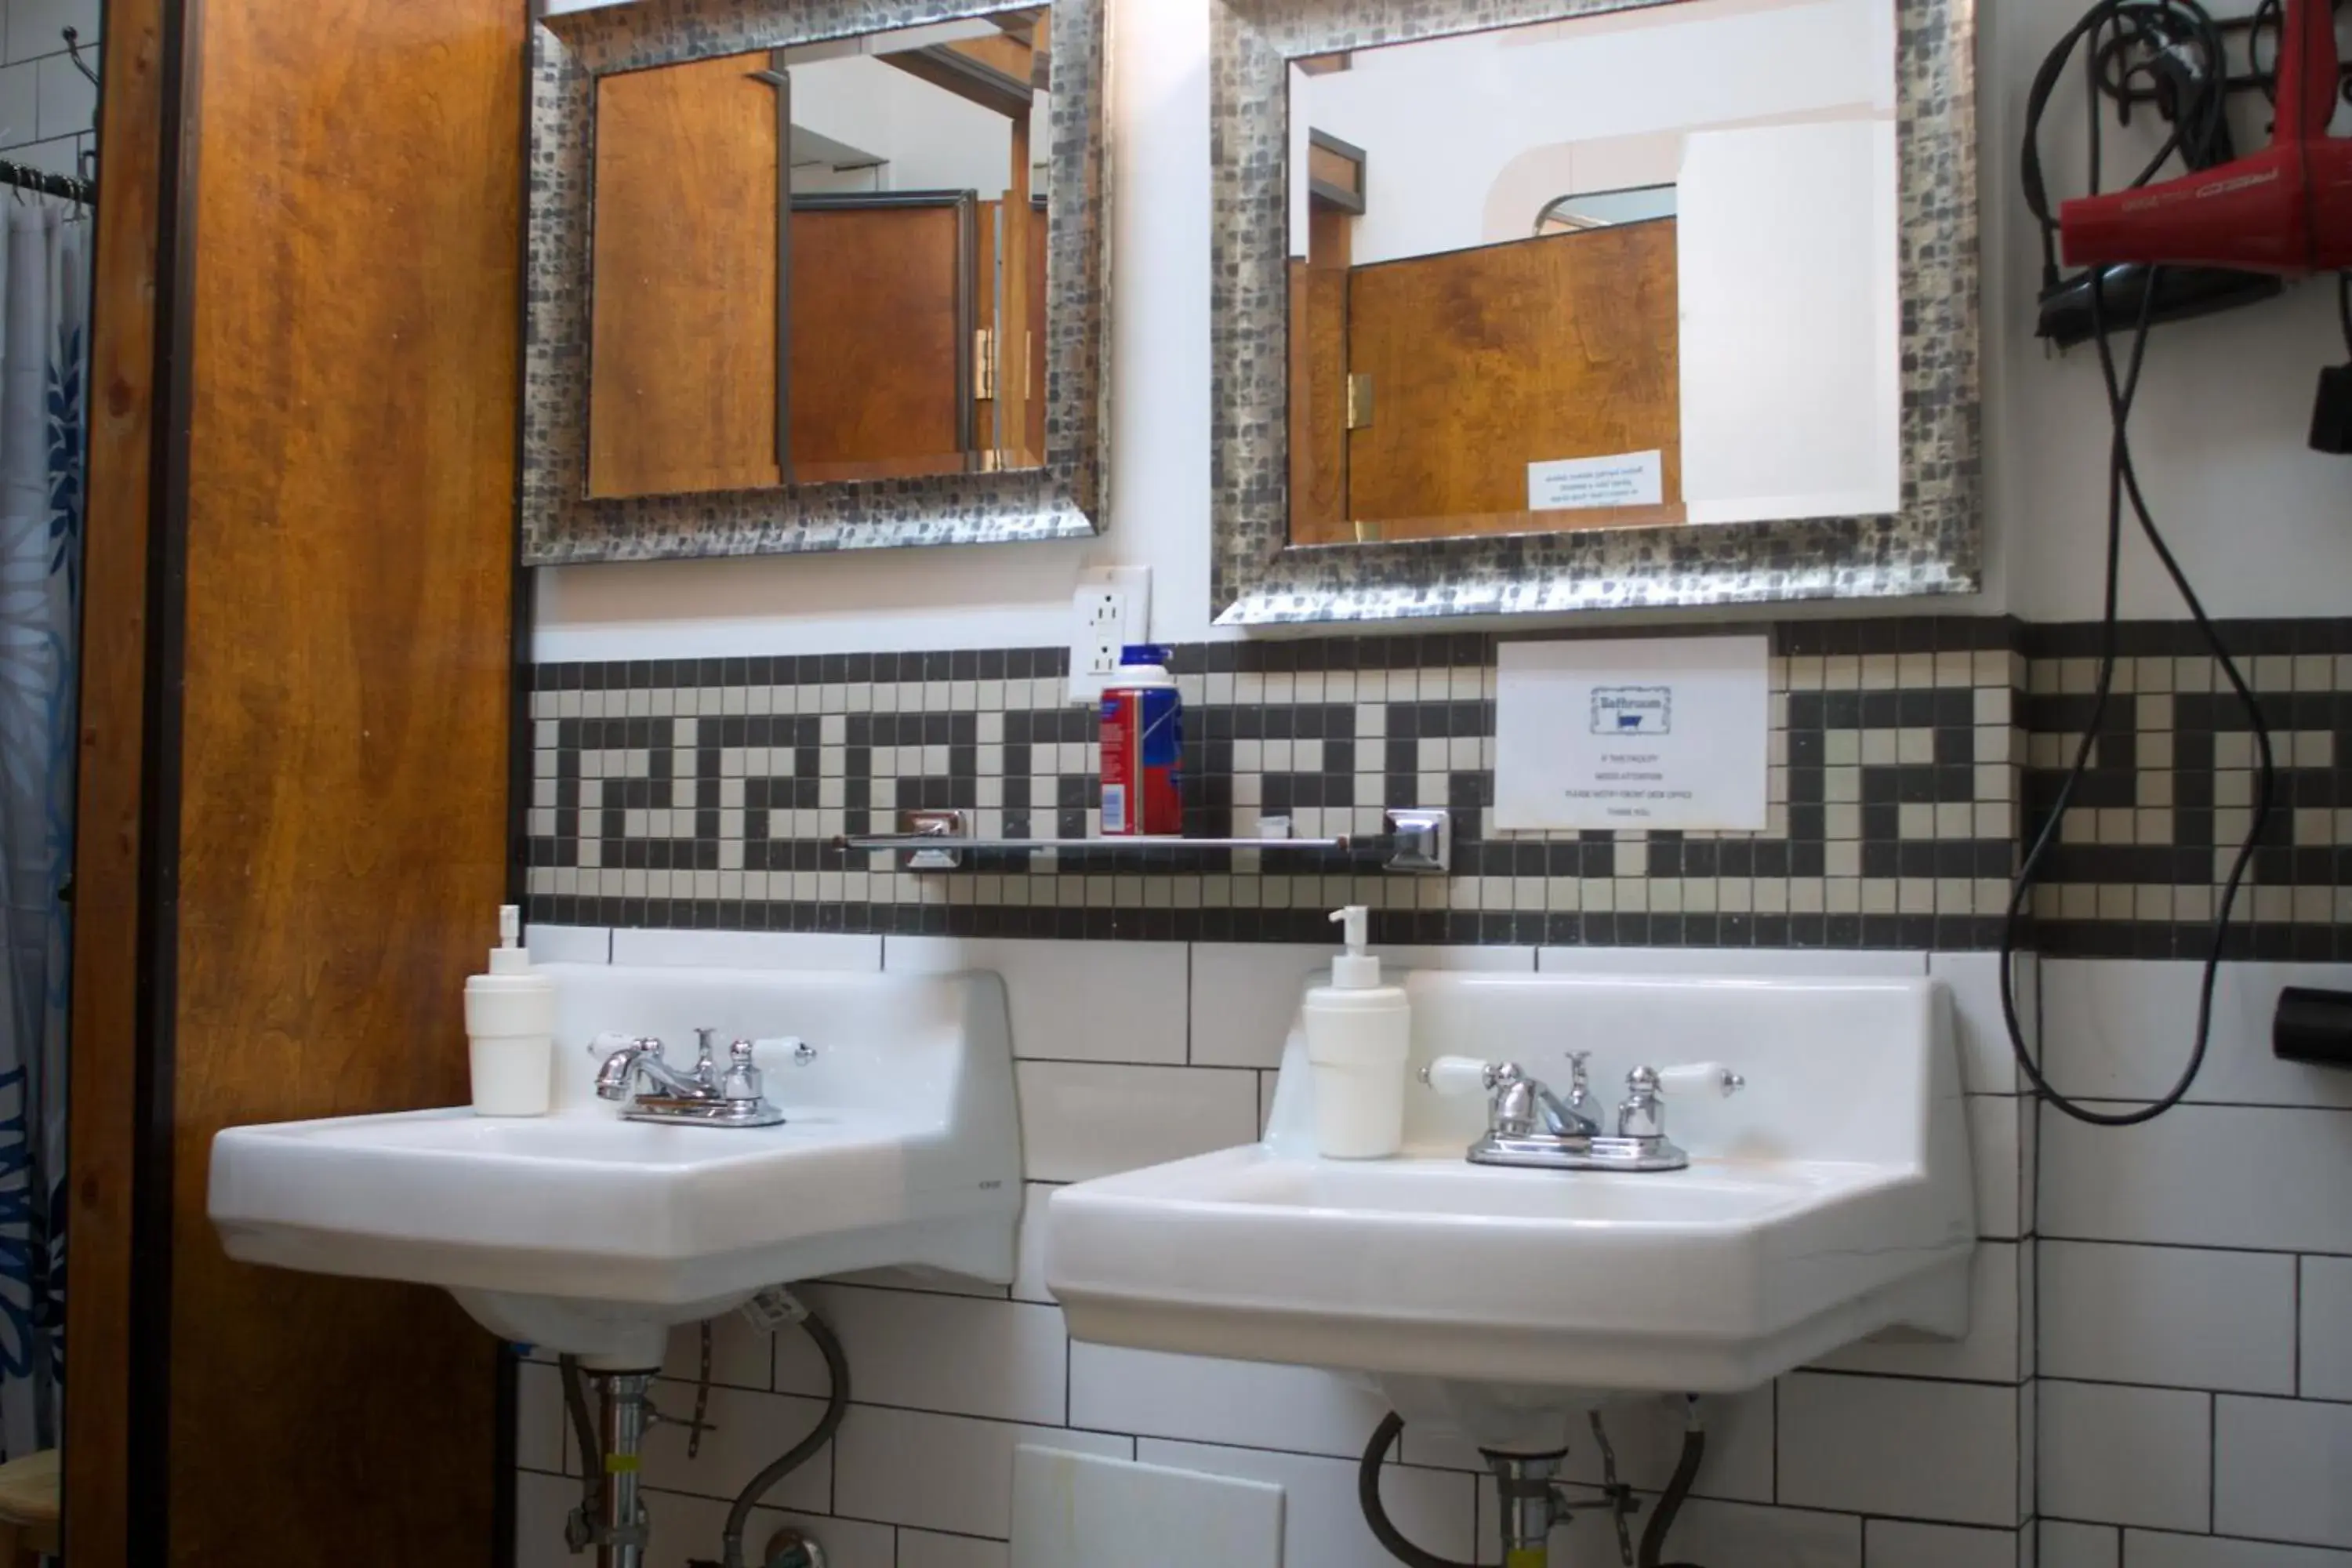 Area and facilities, Bathroom in Interfaith Retreats